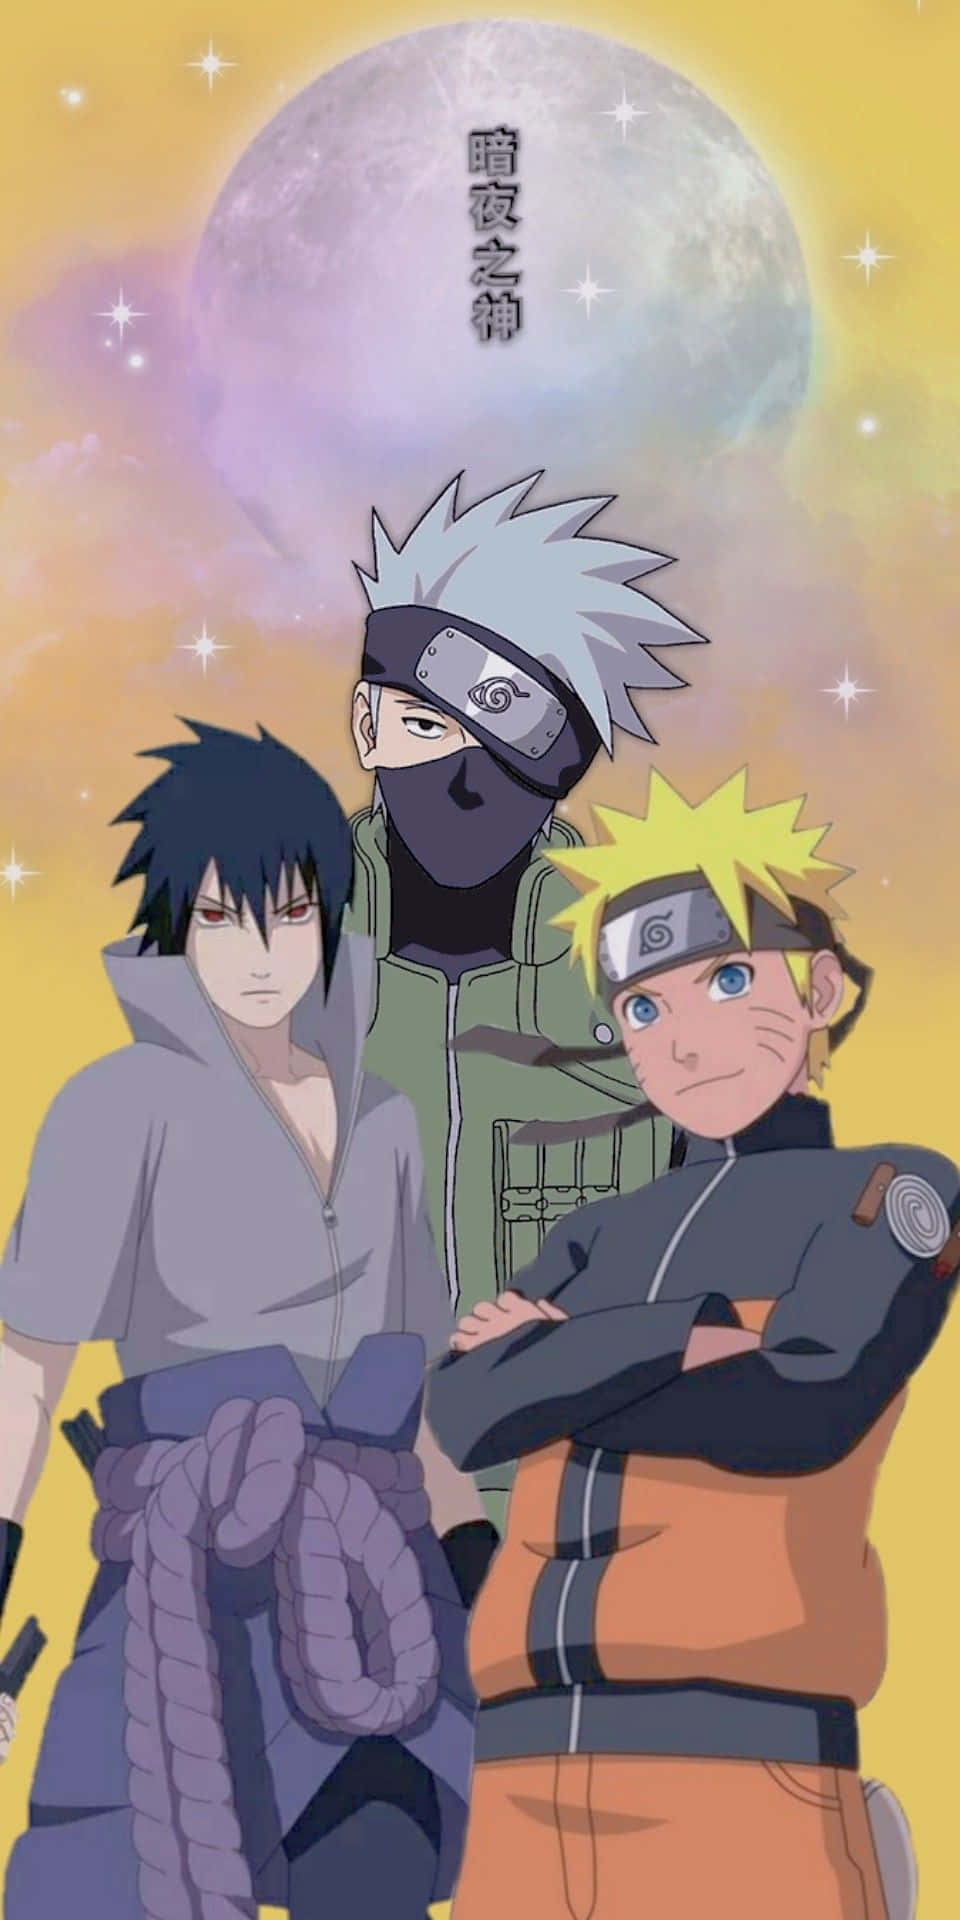 "Kakashi, Naruto and Sasuke, three members of the same team working together for a common goal." Wallpaper